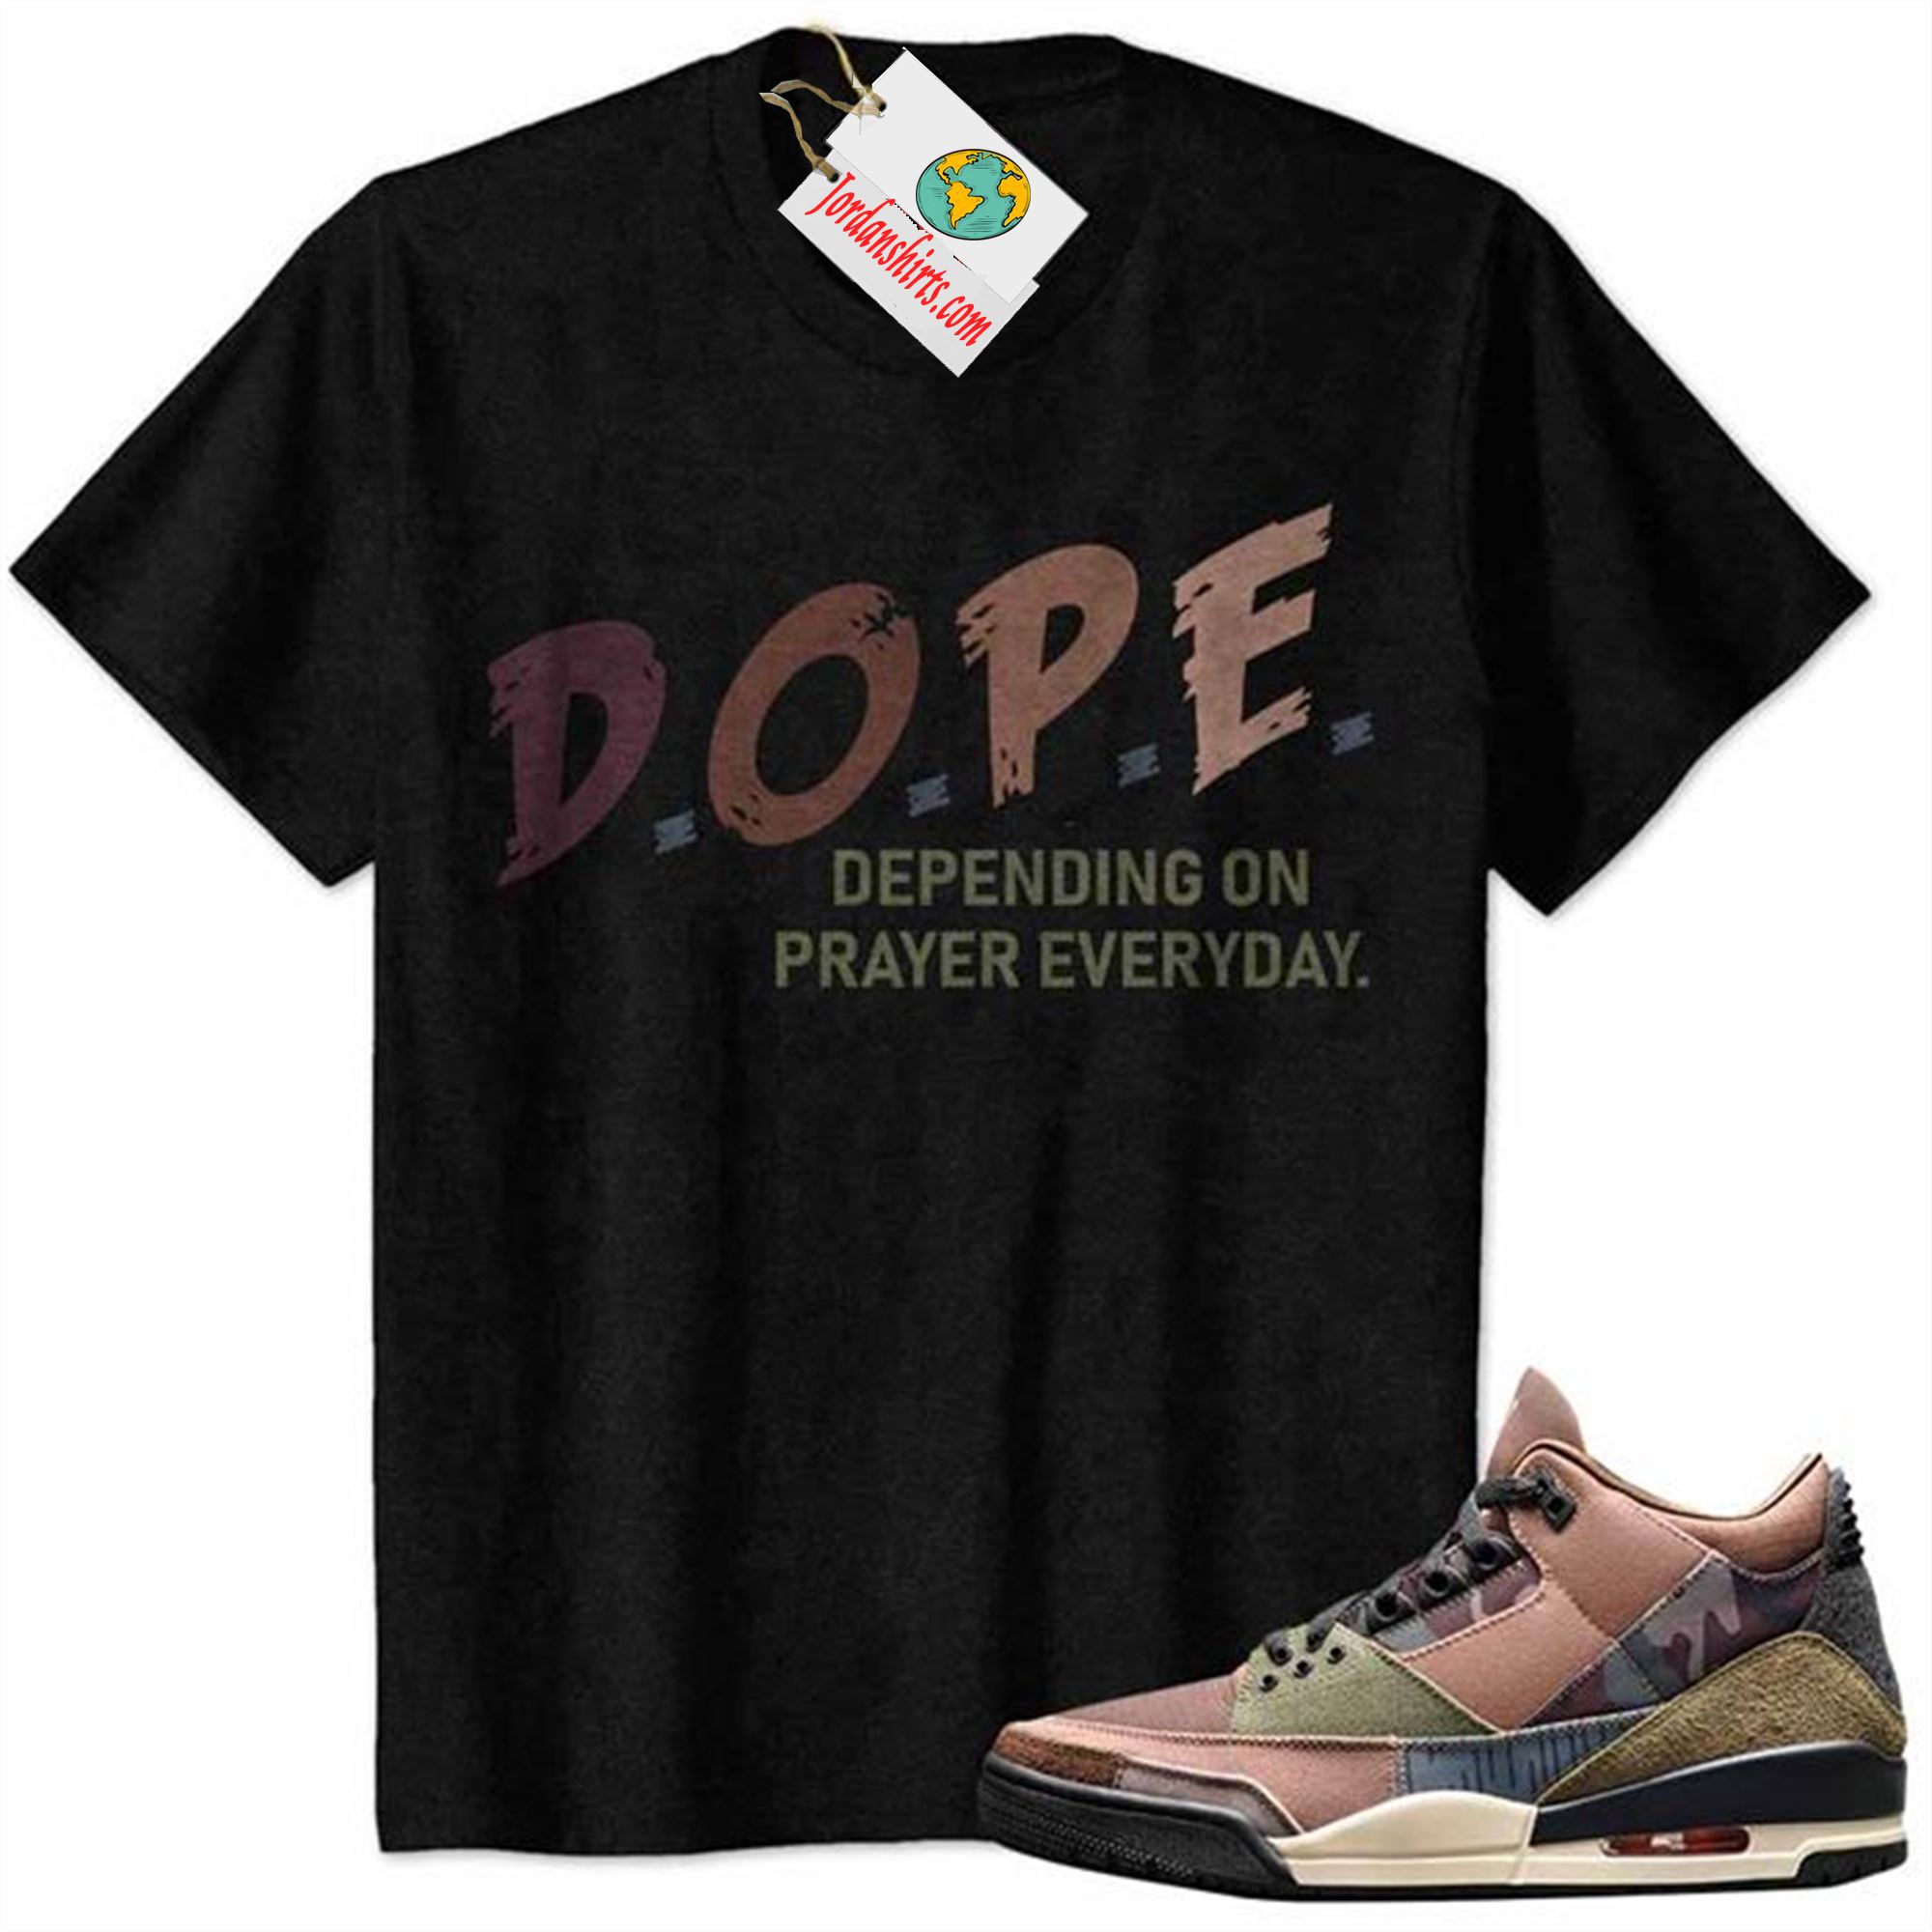 Jordan 3 Shirt, Dope Dope Depending On Prayer Everyday Black Air Jordan 3 Camo 3s Size Up To 5xl